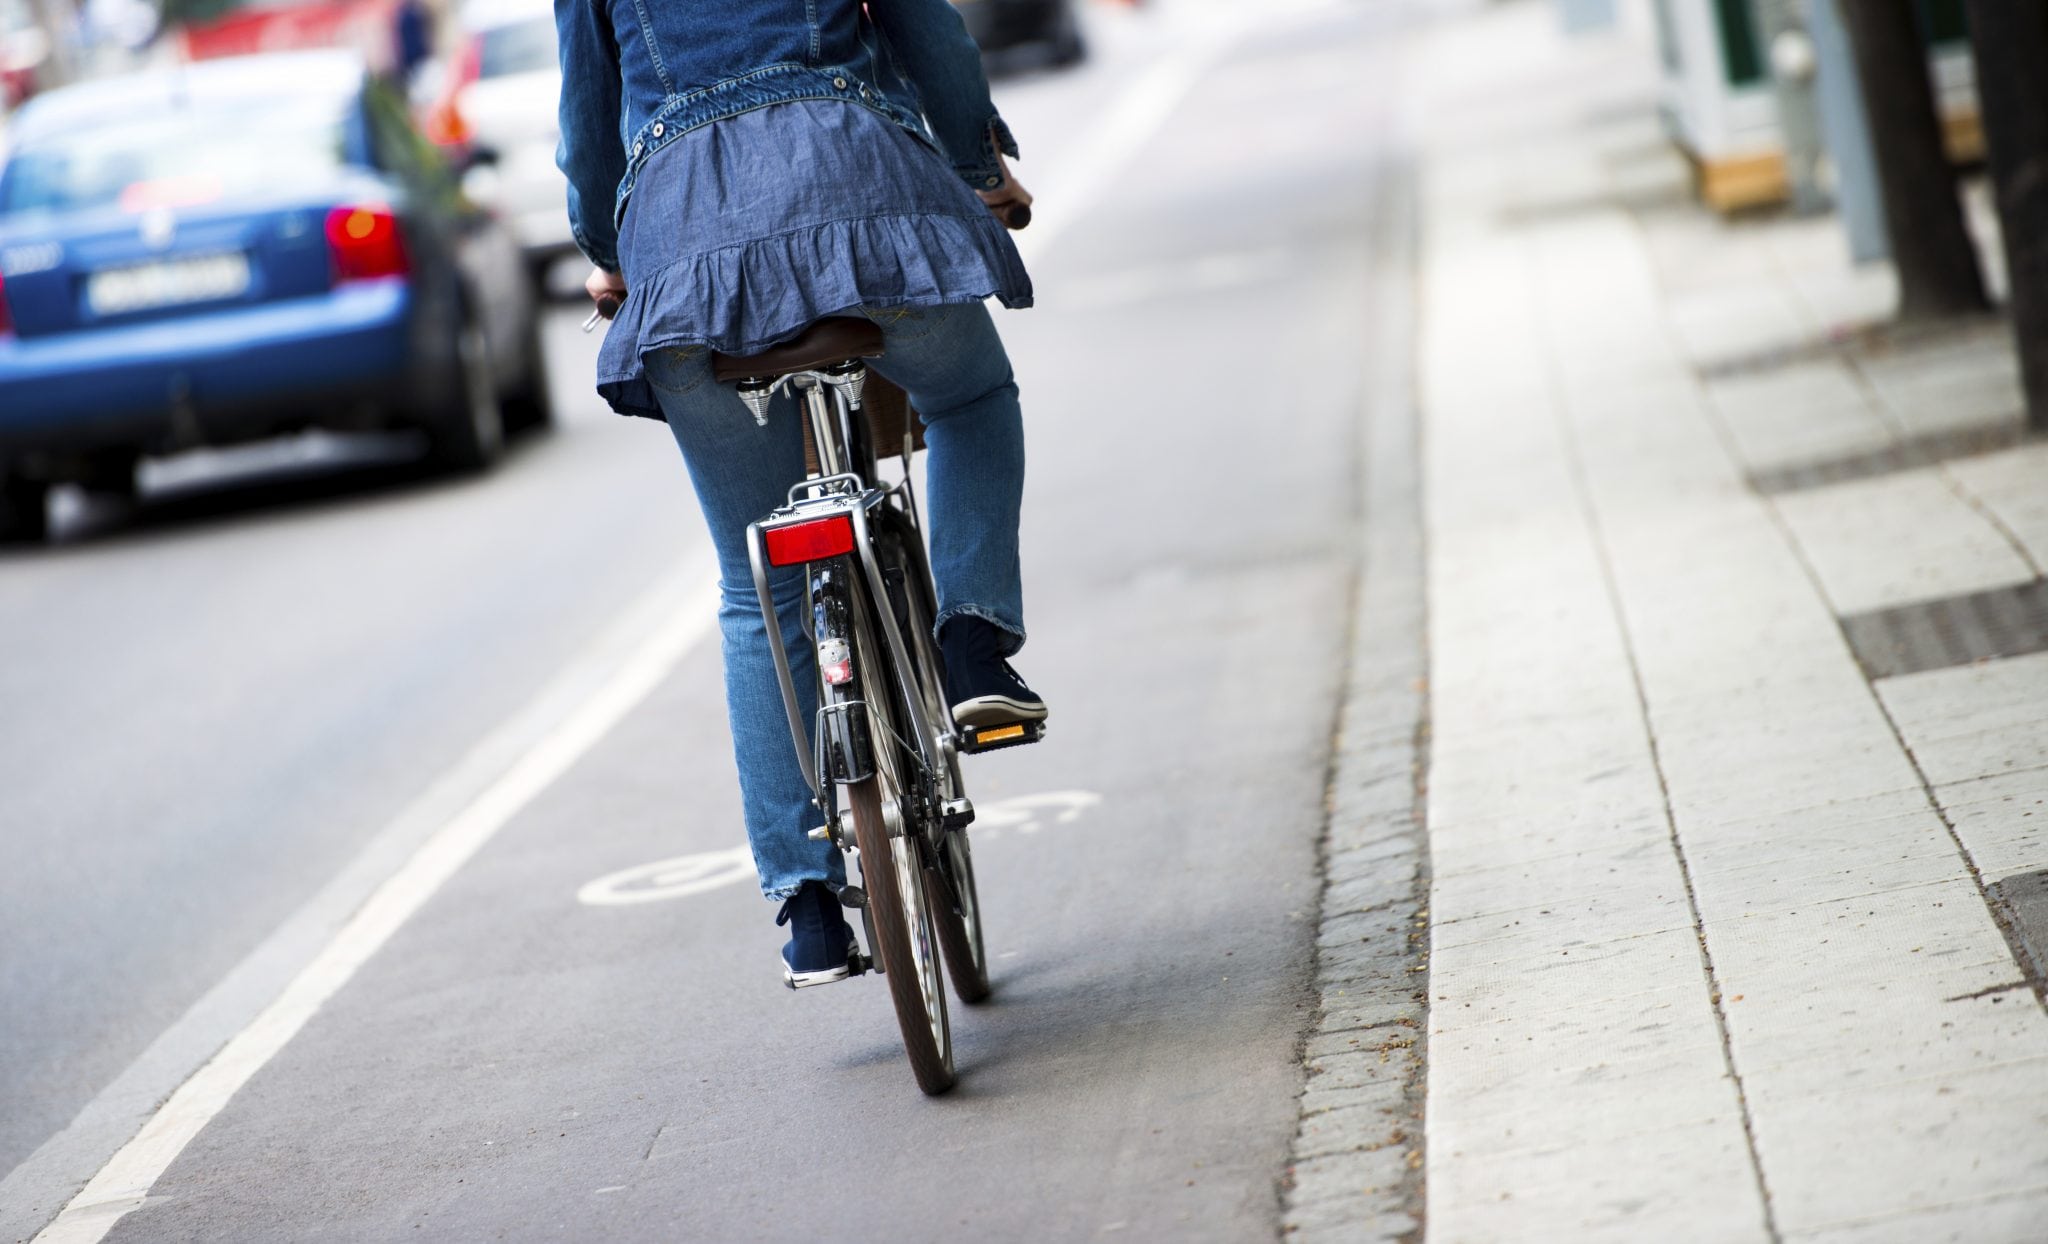 A woman rides her bike through a city.